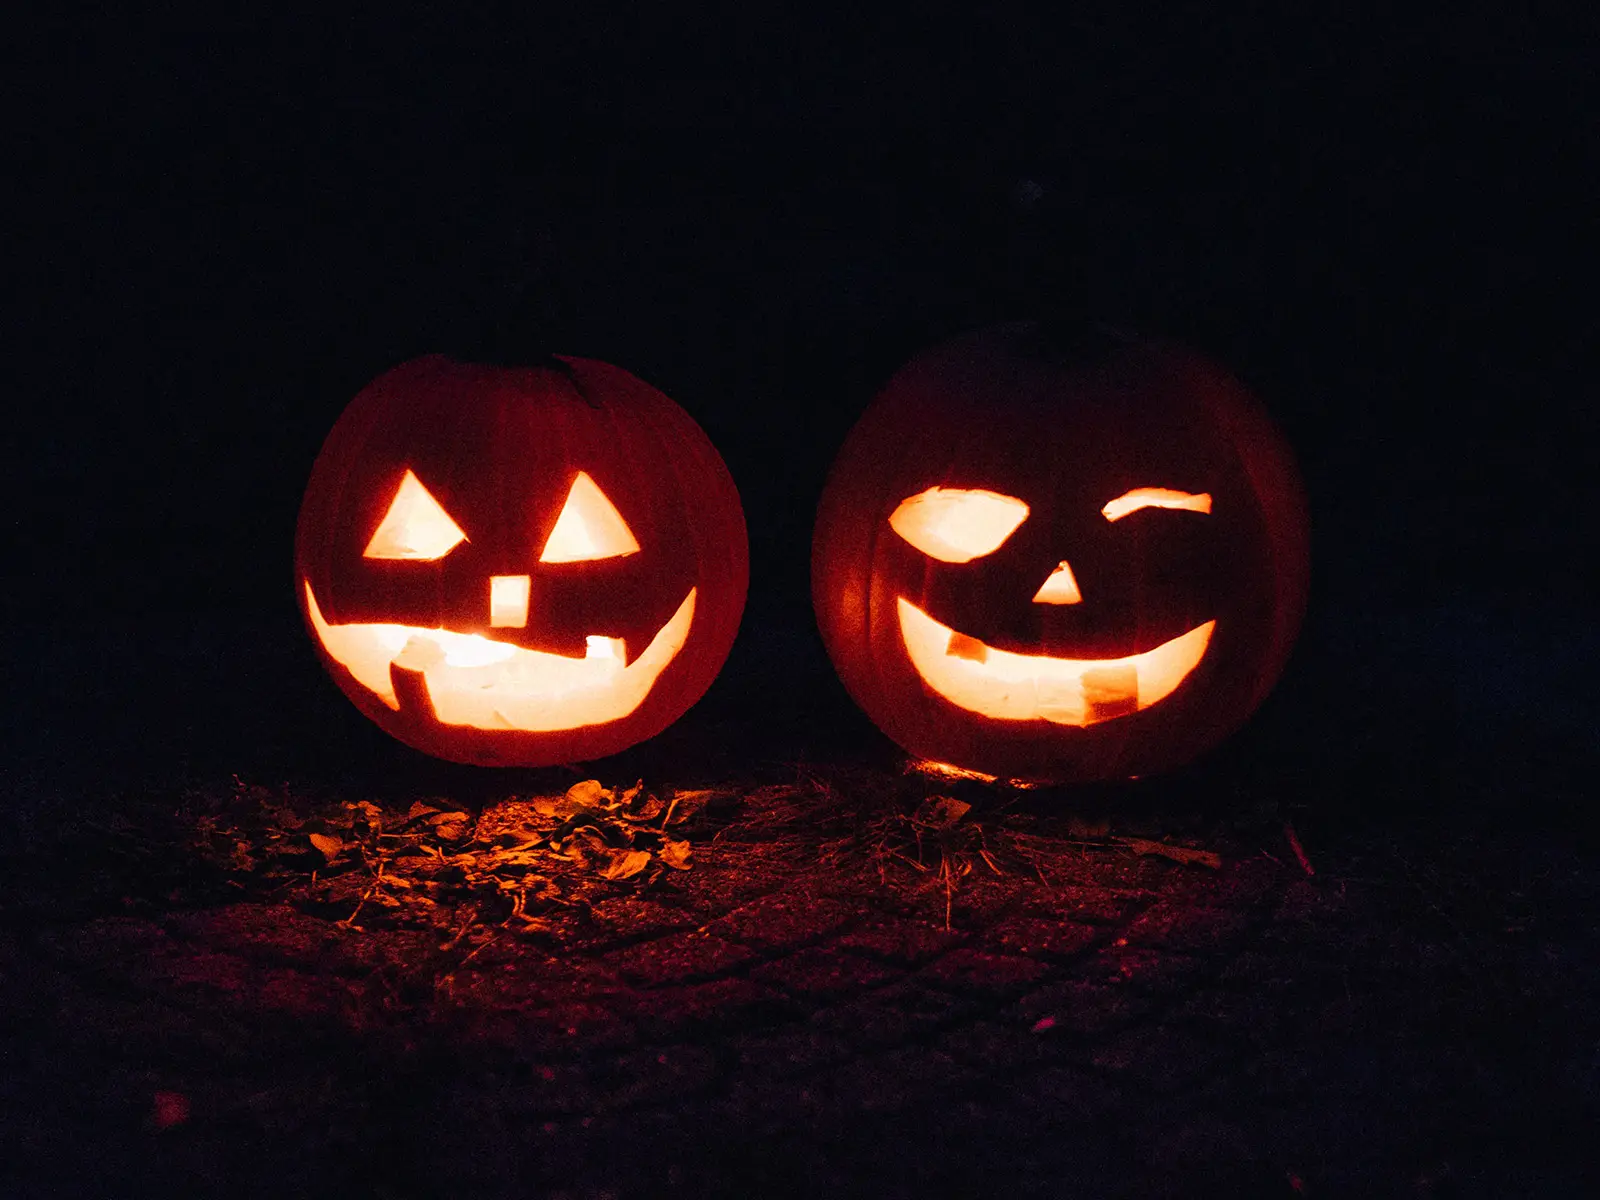 https://www.innaturale.com/wp-content/uploads/2017/10/storia-di-jack-o-lantern-halloween.jpg